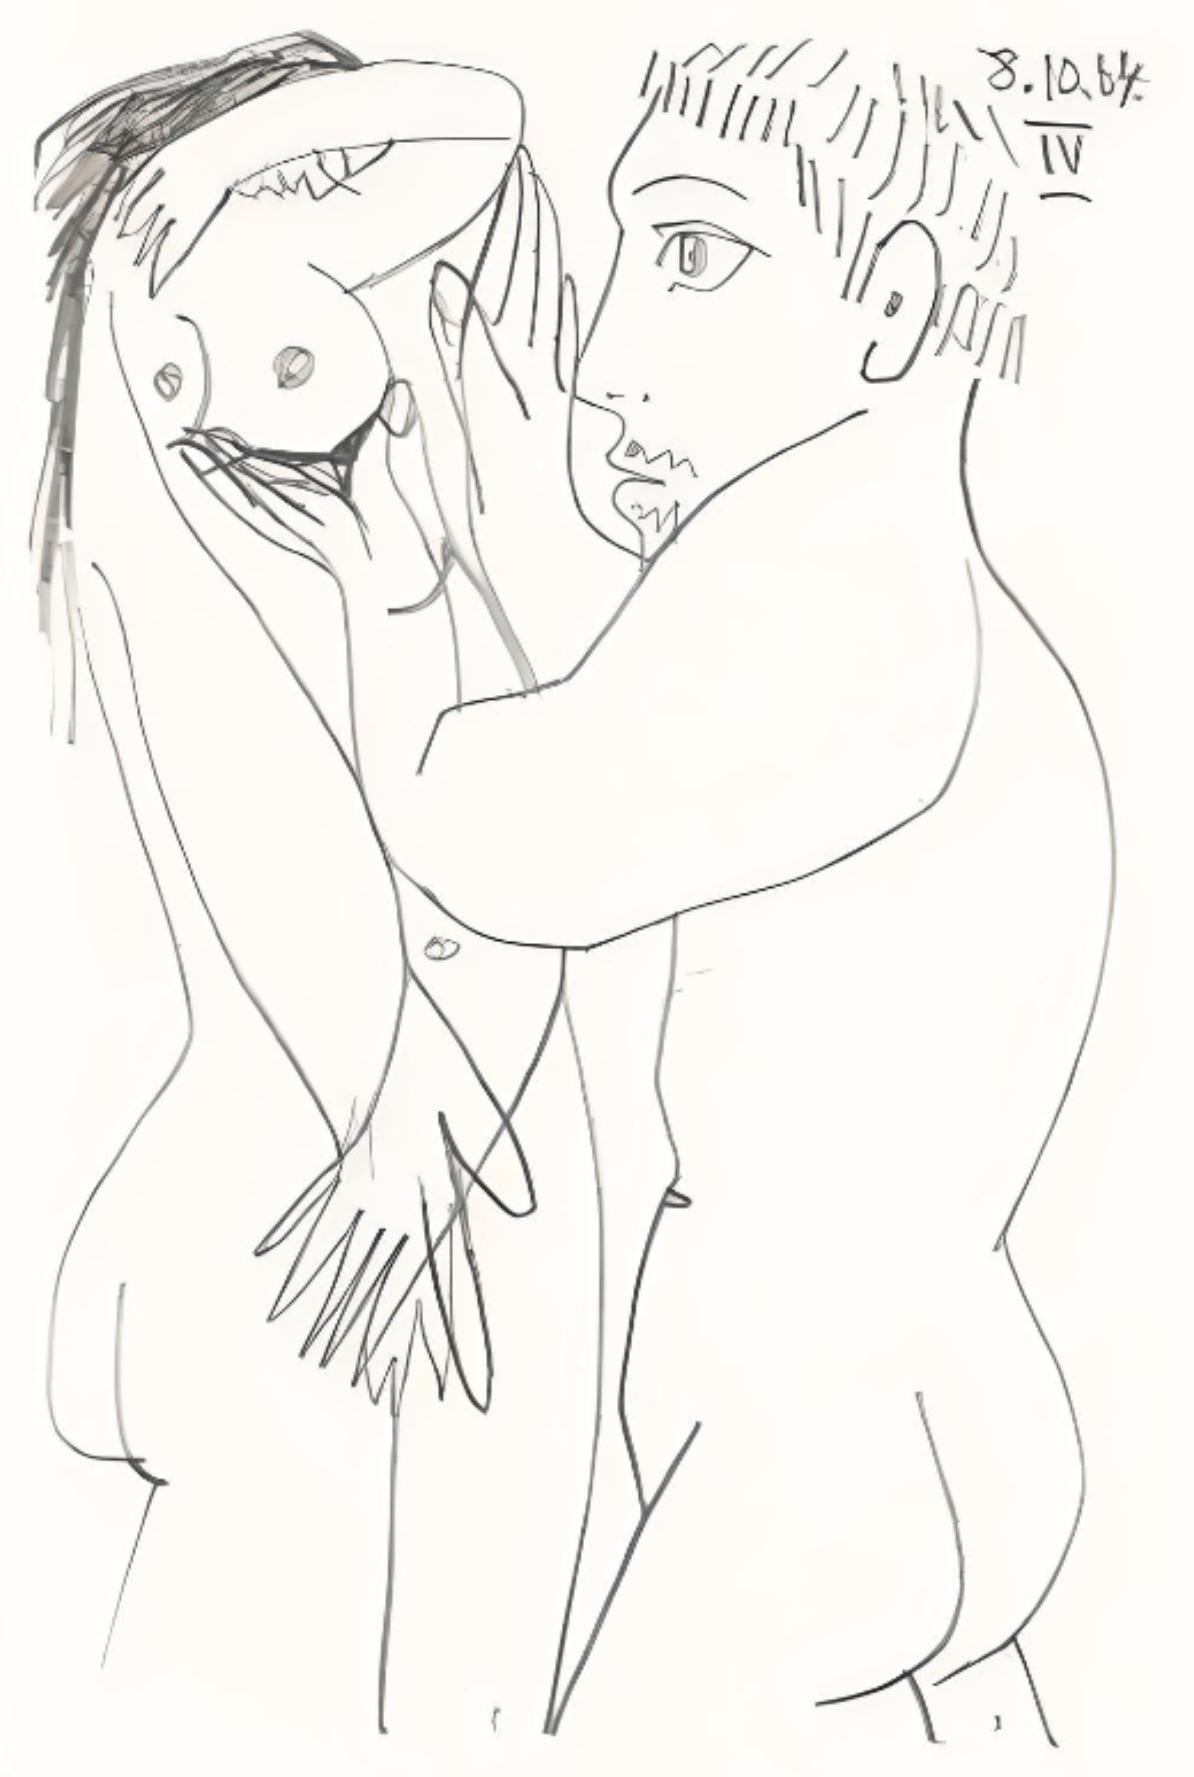 Picasso, Le Goût du Bonheur 53 (Cramer 148; Bloch 2013) (after)